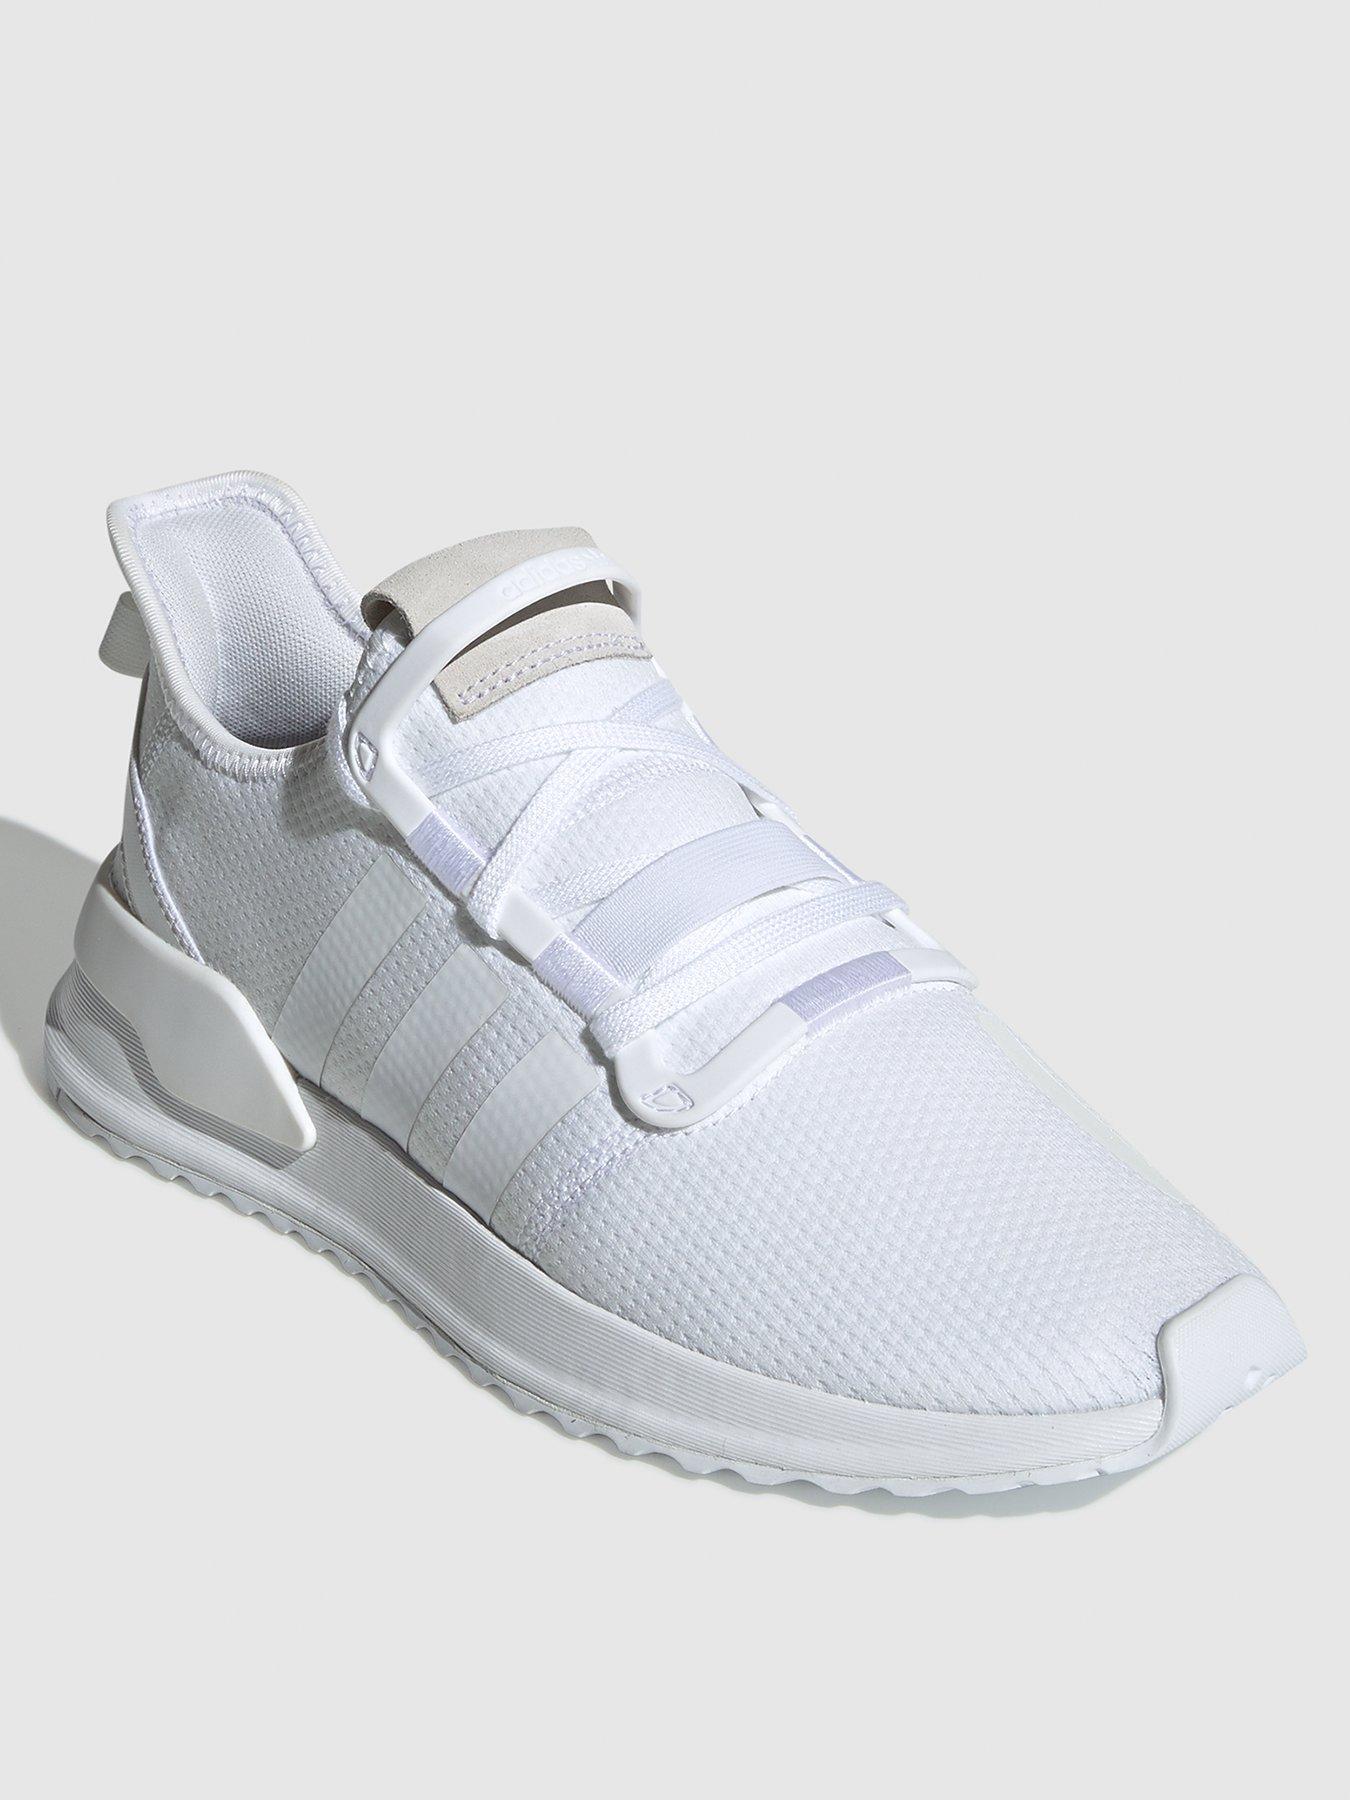 adidas originals u path run trainers in white